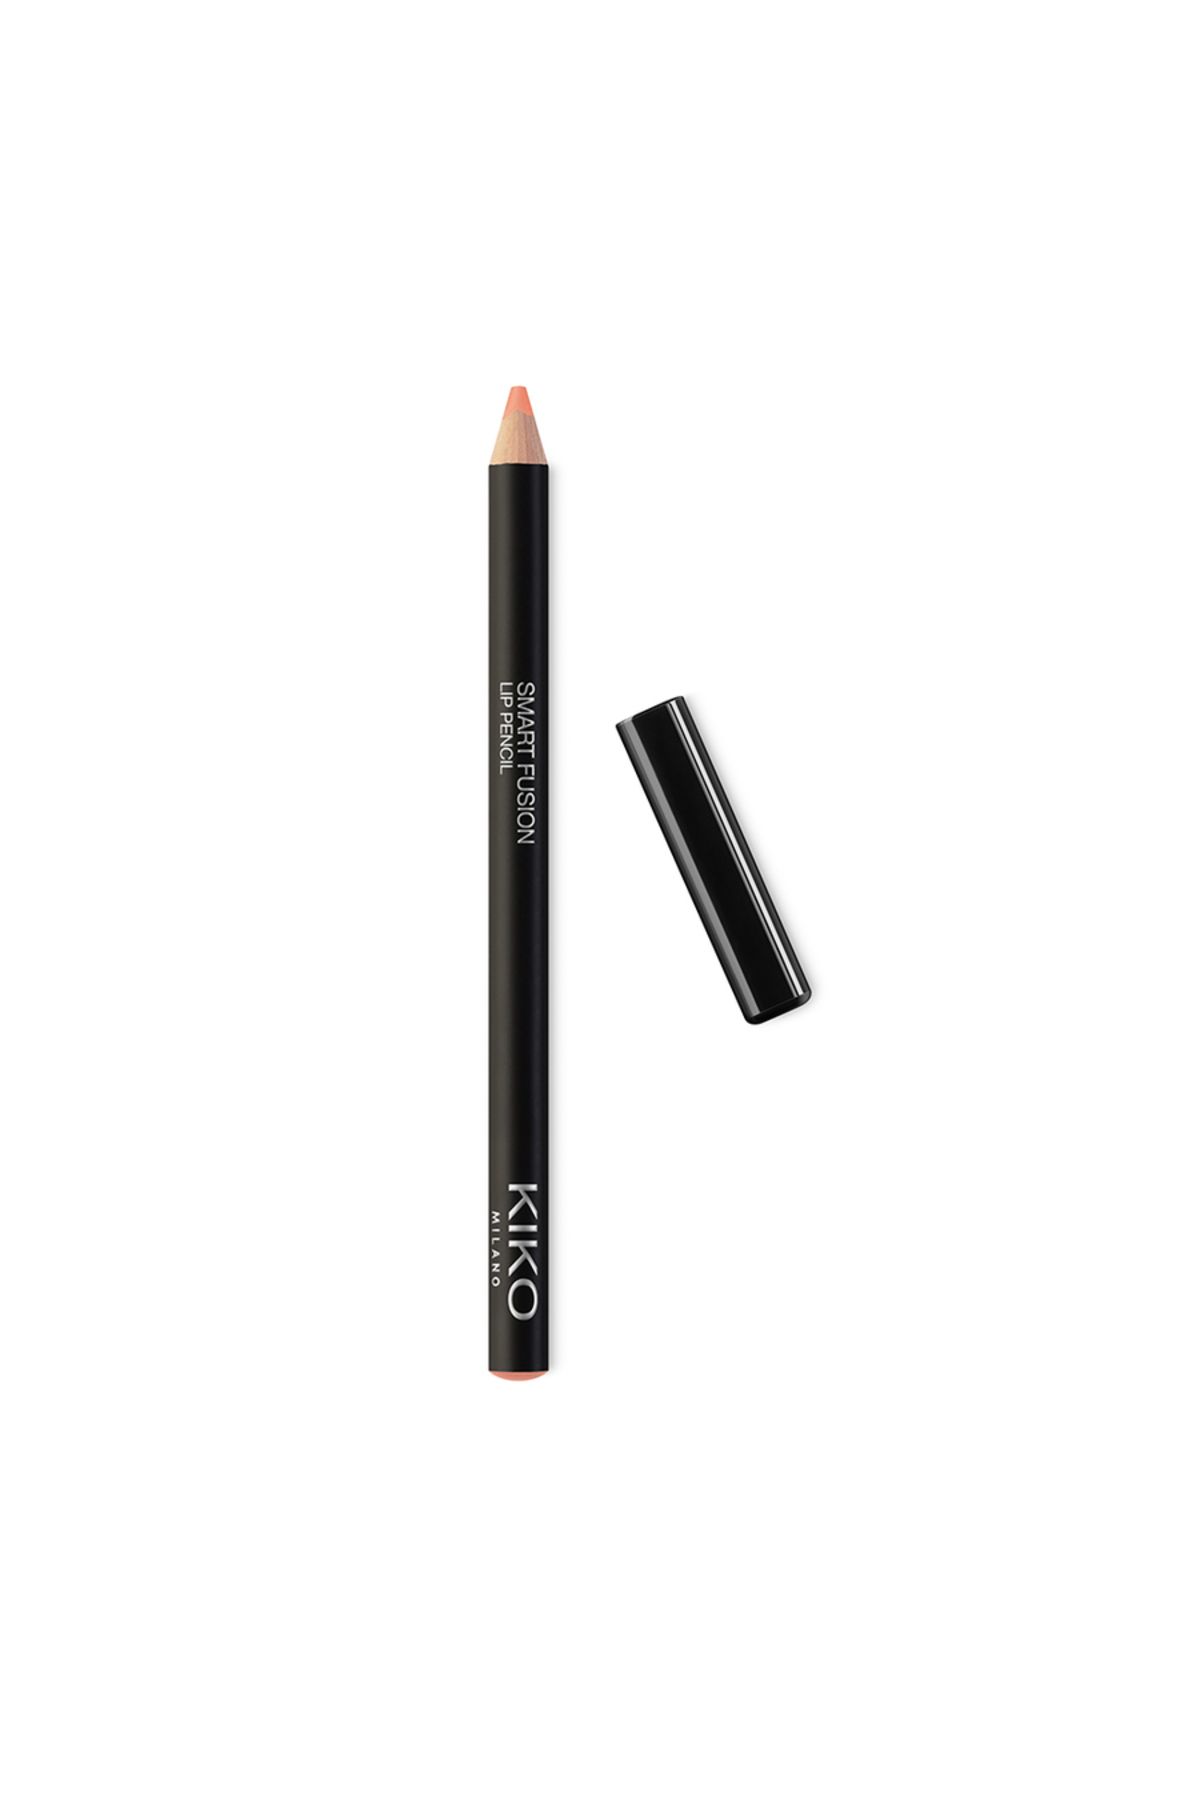 KIKO DUDAK KALEMİ - Smart Fusion Lip Pencil - 502 Peachy Nude